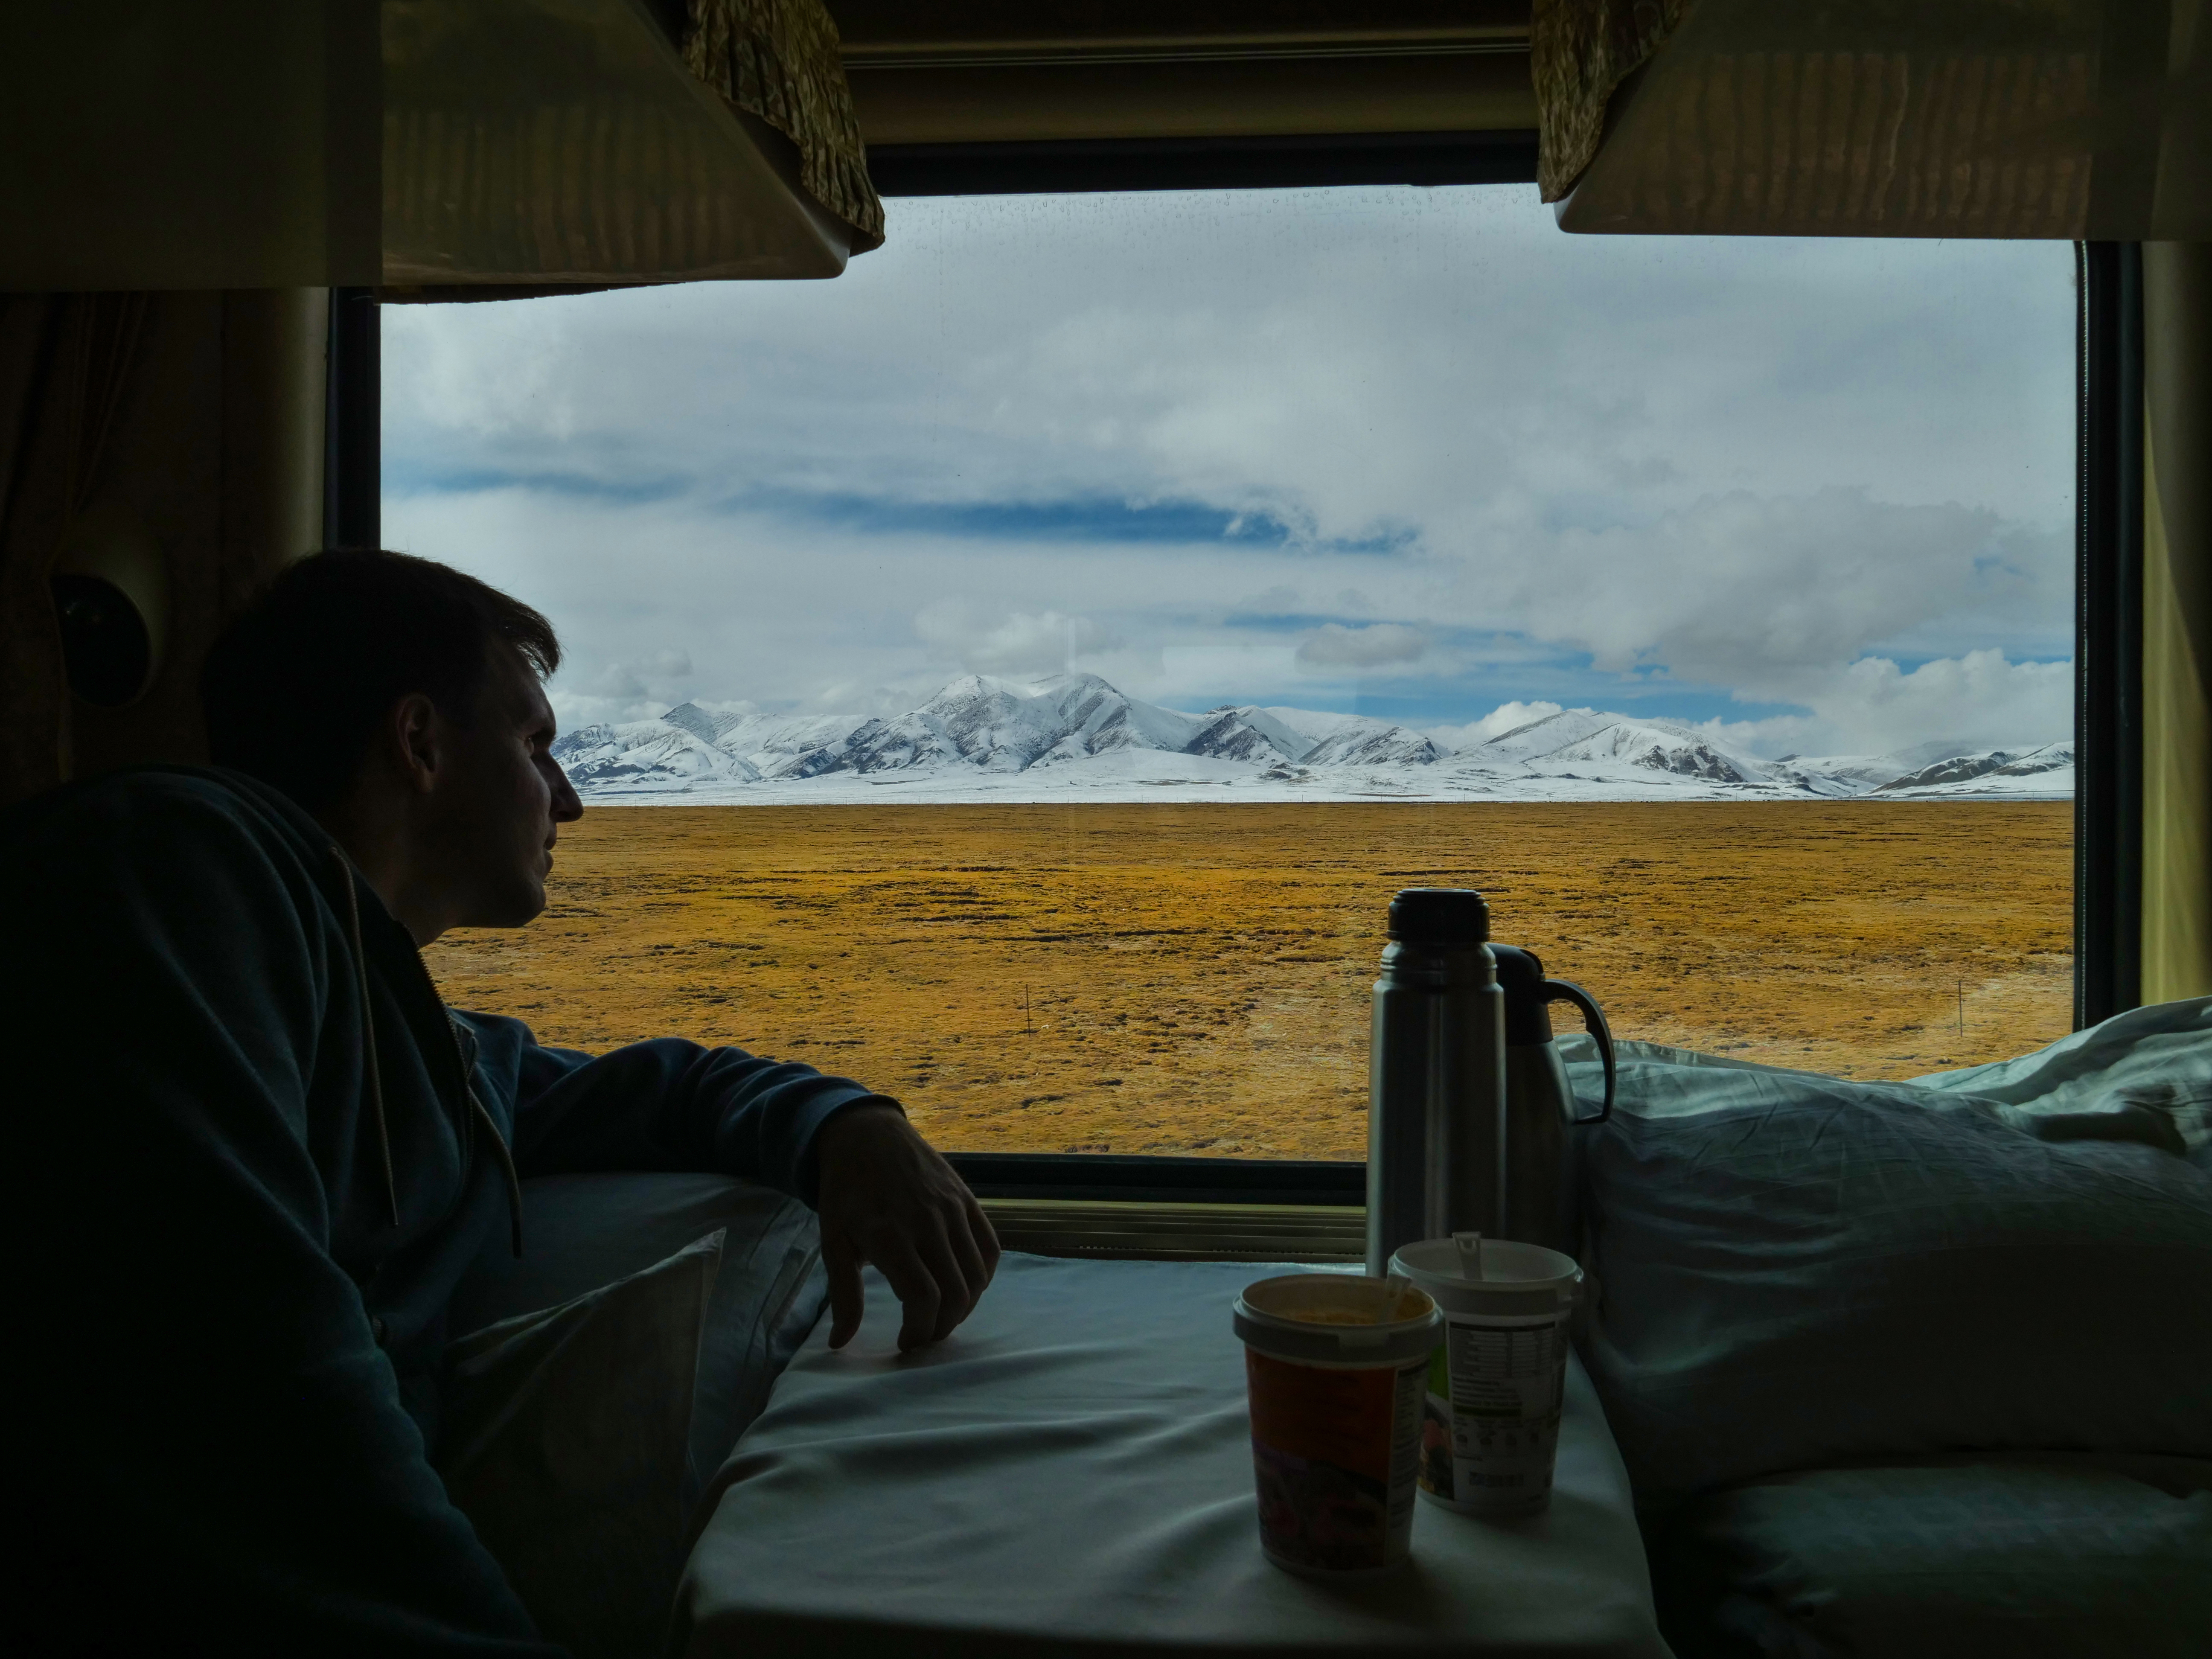 A man sitting in a first-class train cabin | Source: Shutterstock